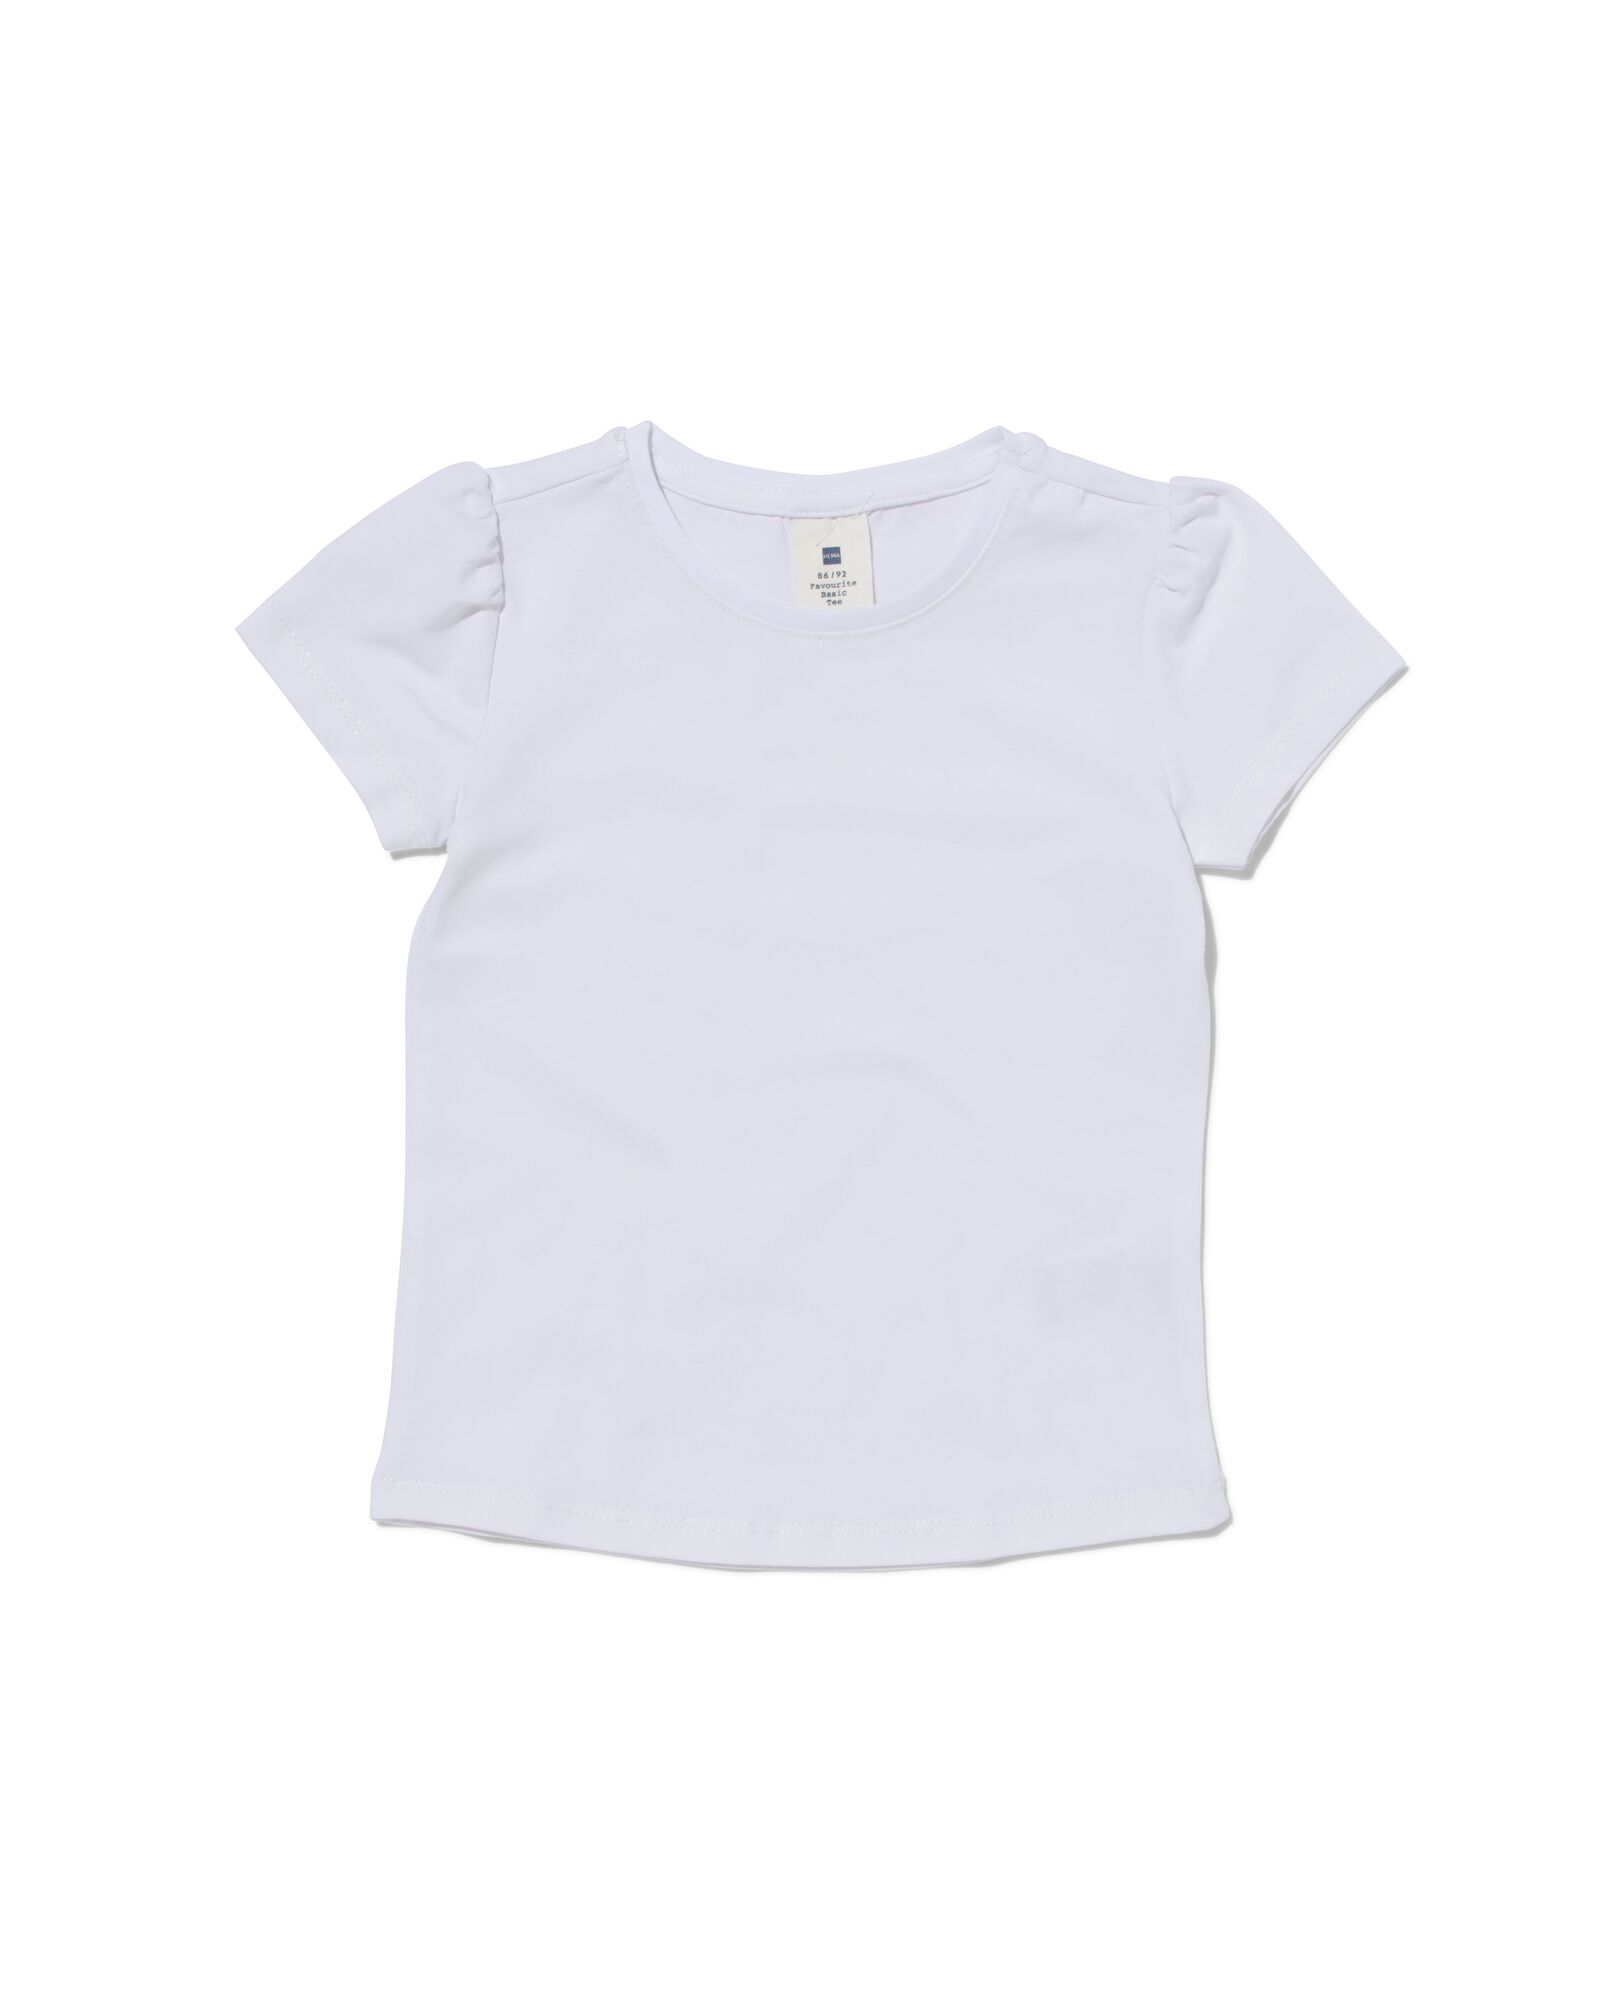 Image of HEMA Kinder T-shirts - 2 Stuks Wit (wit)